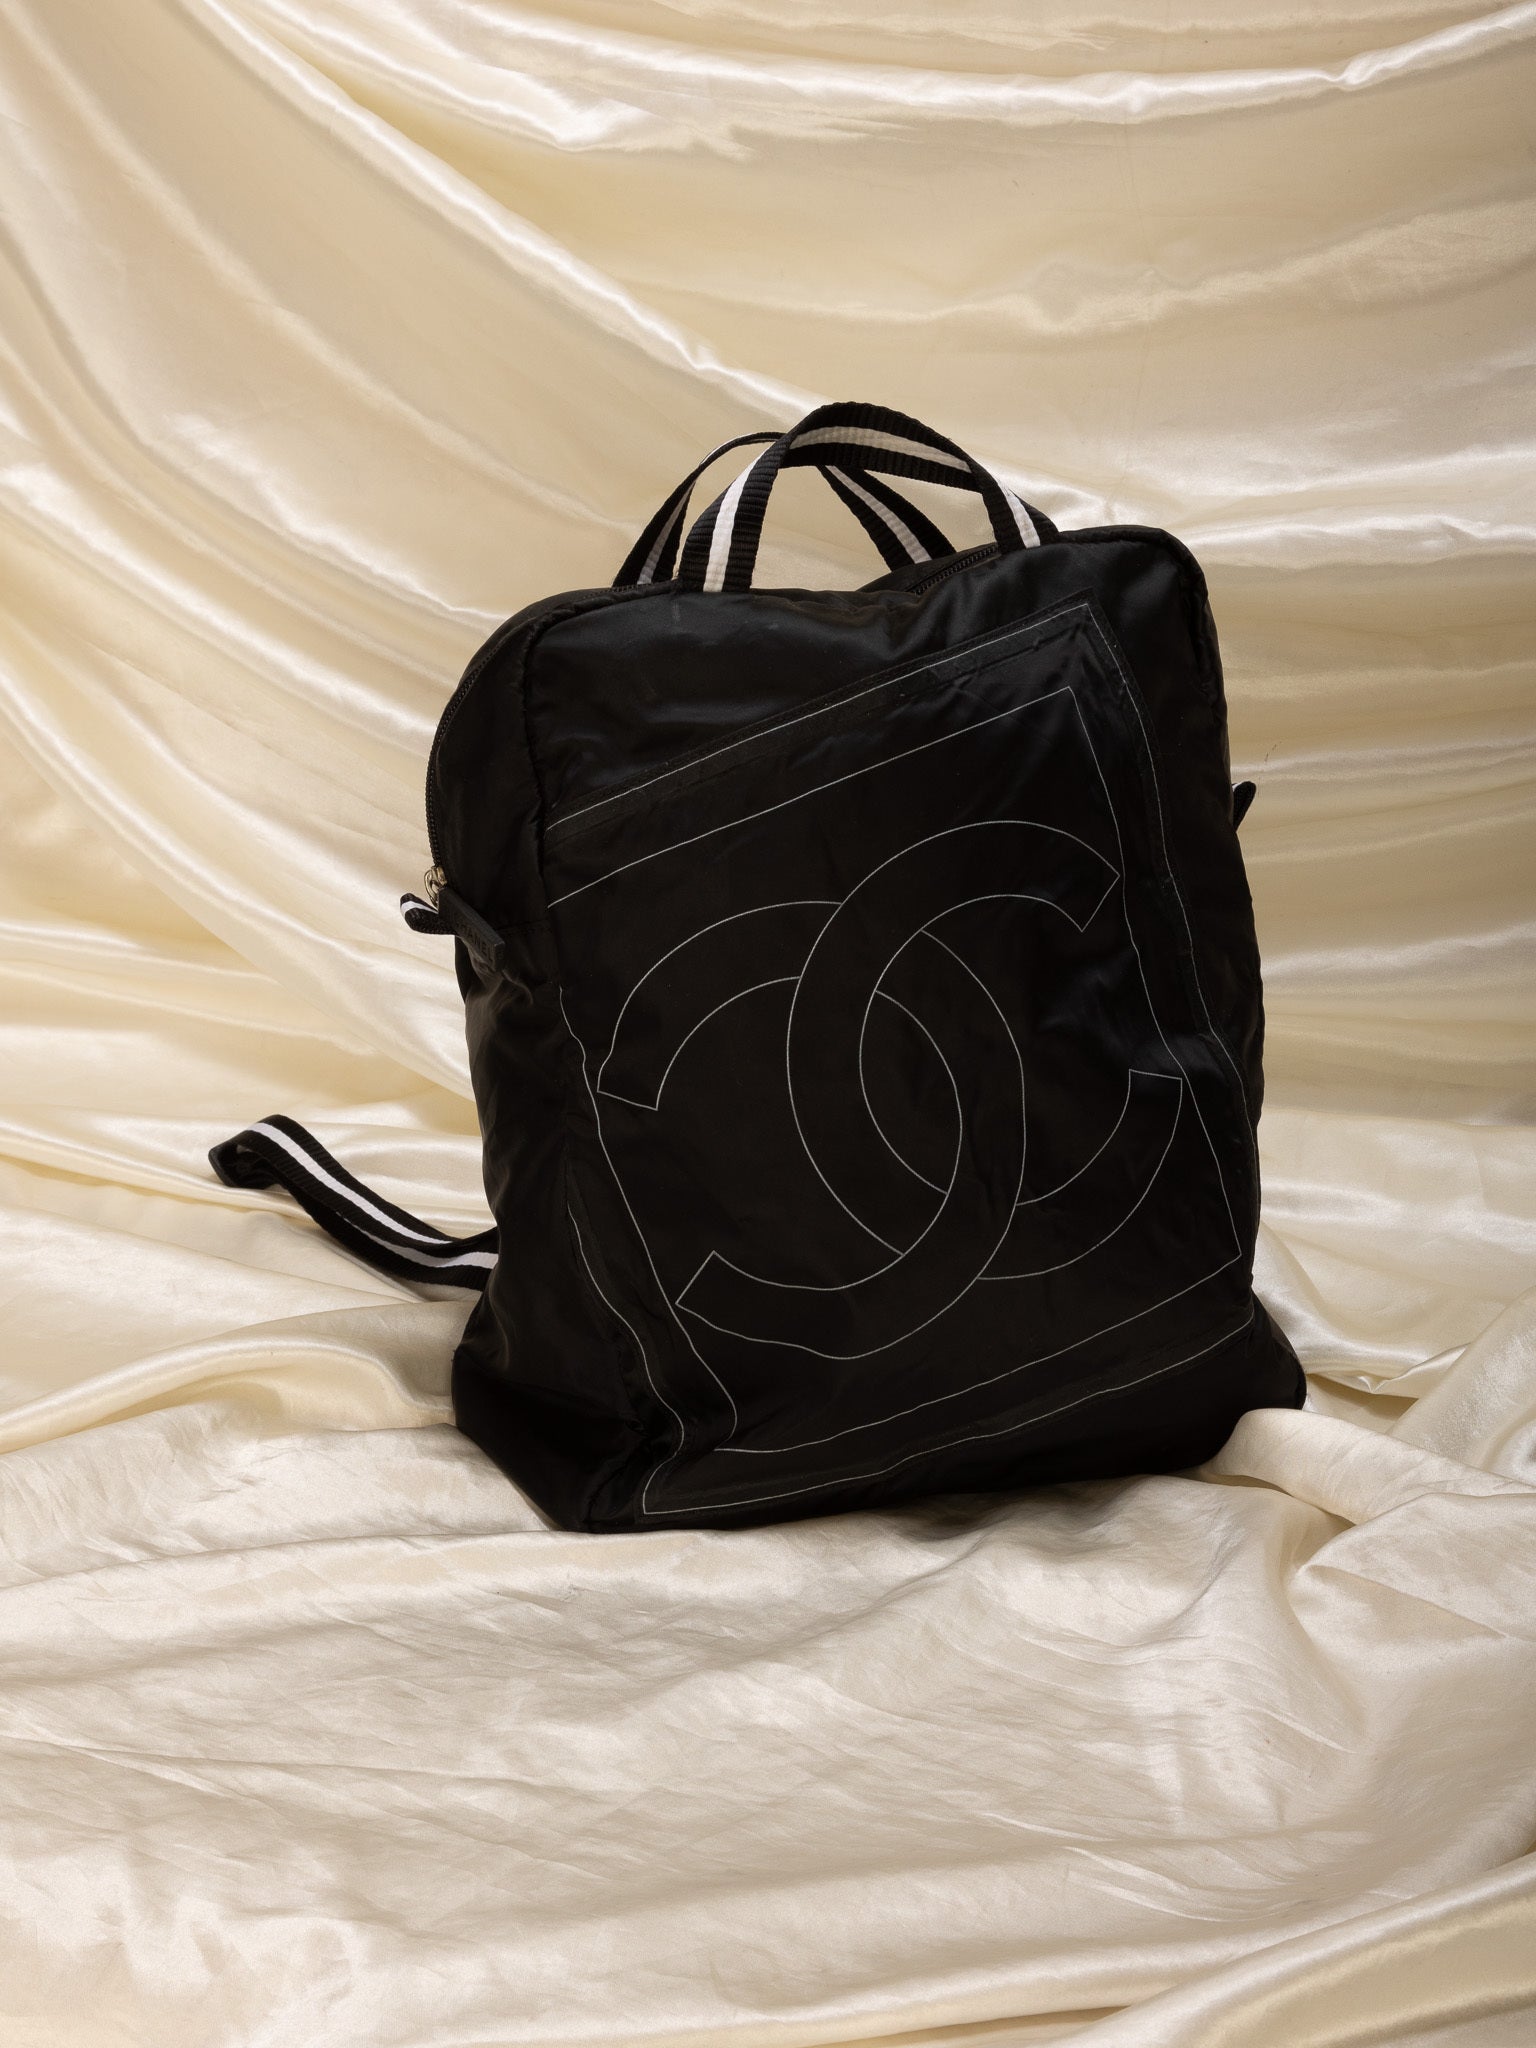 vip chanel backpack bag